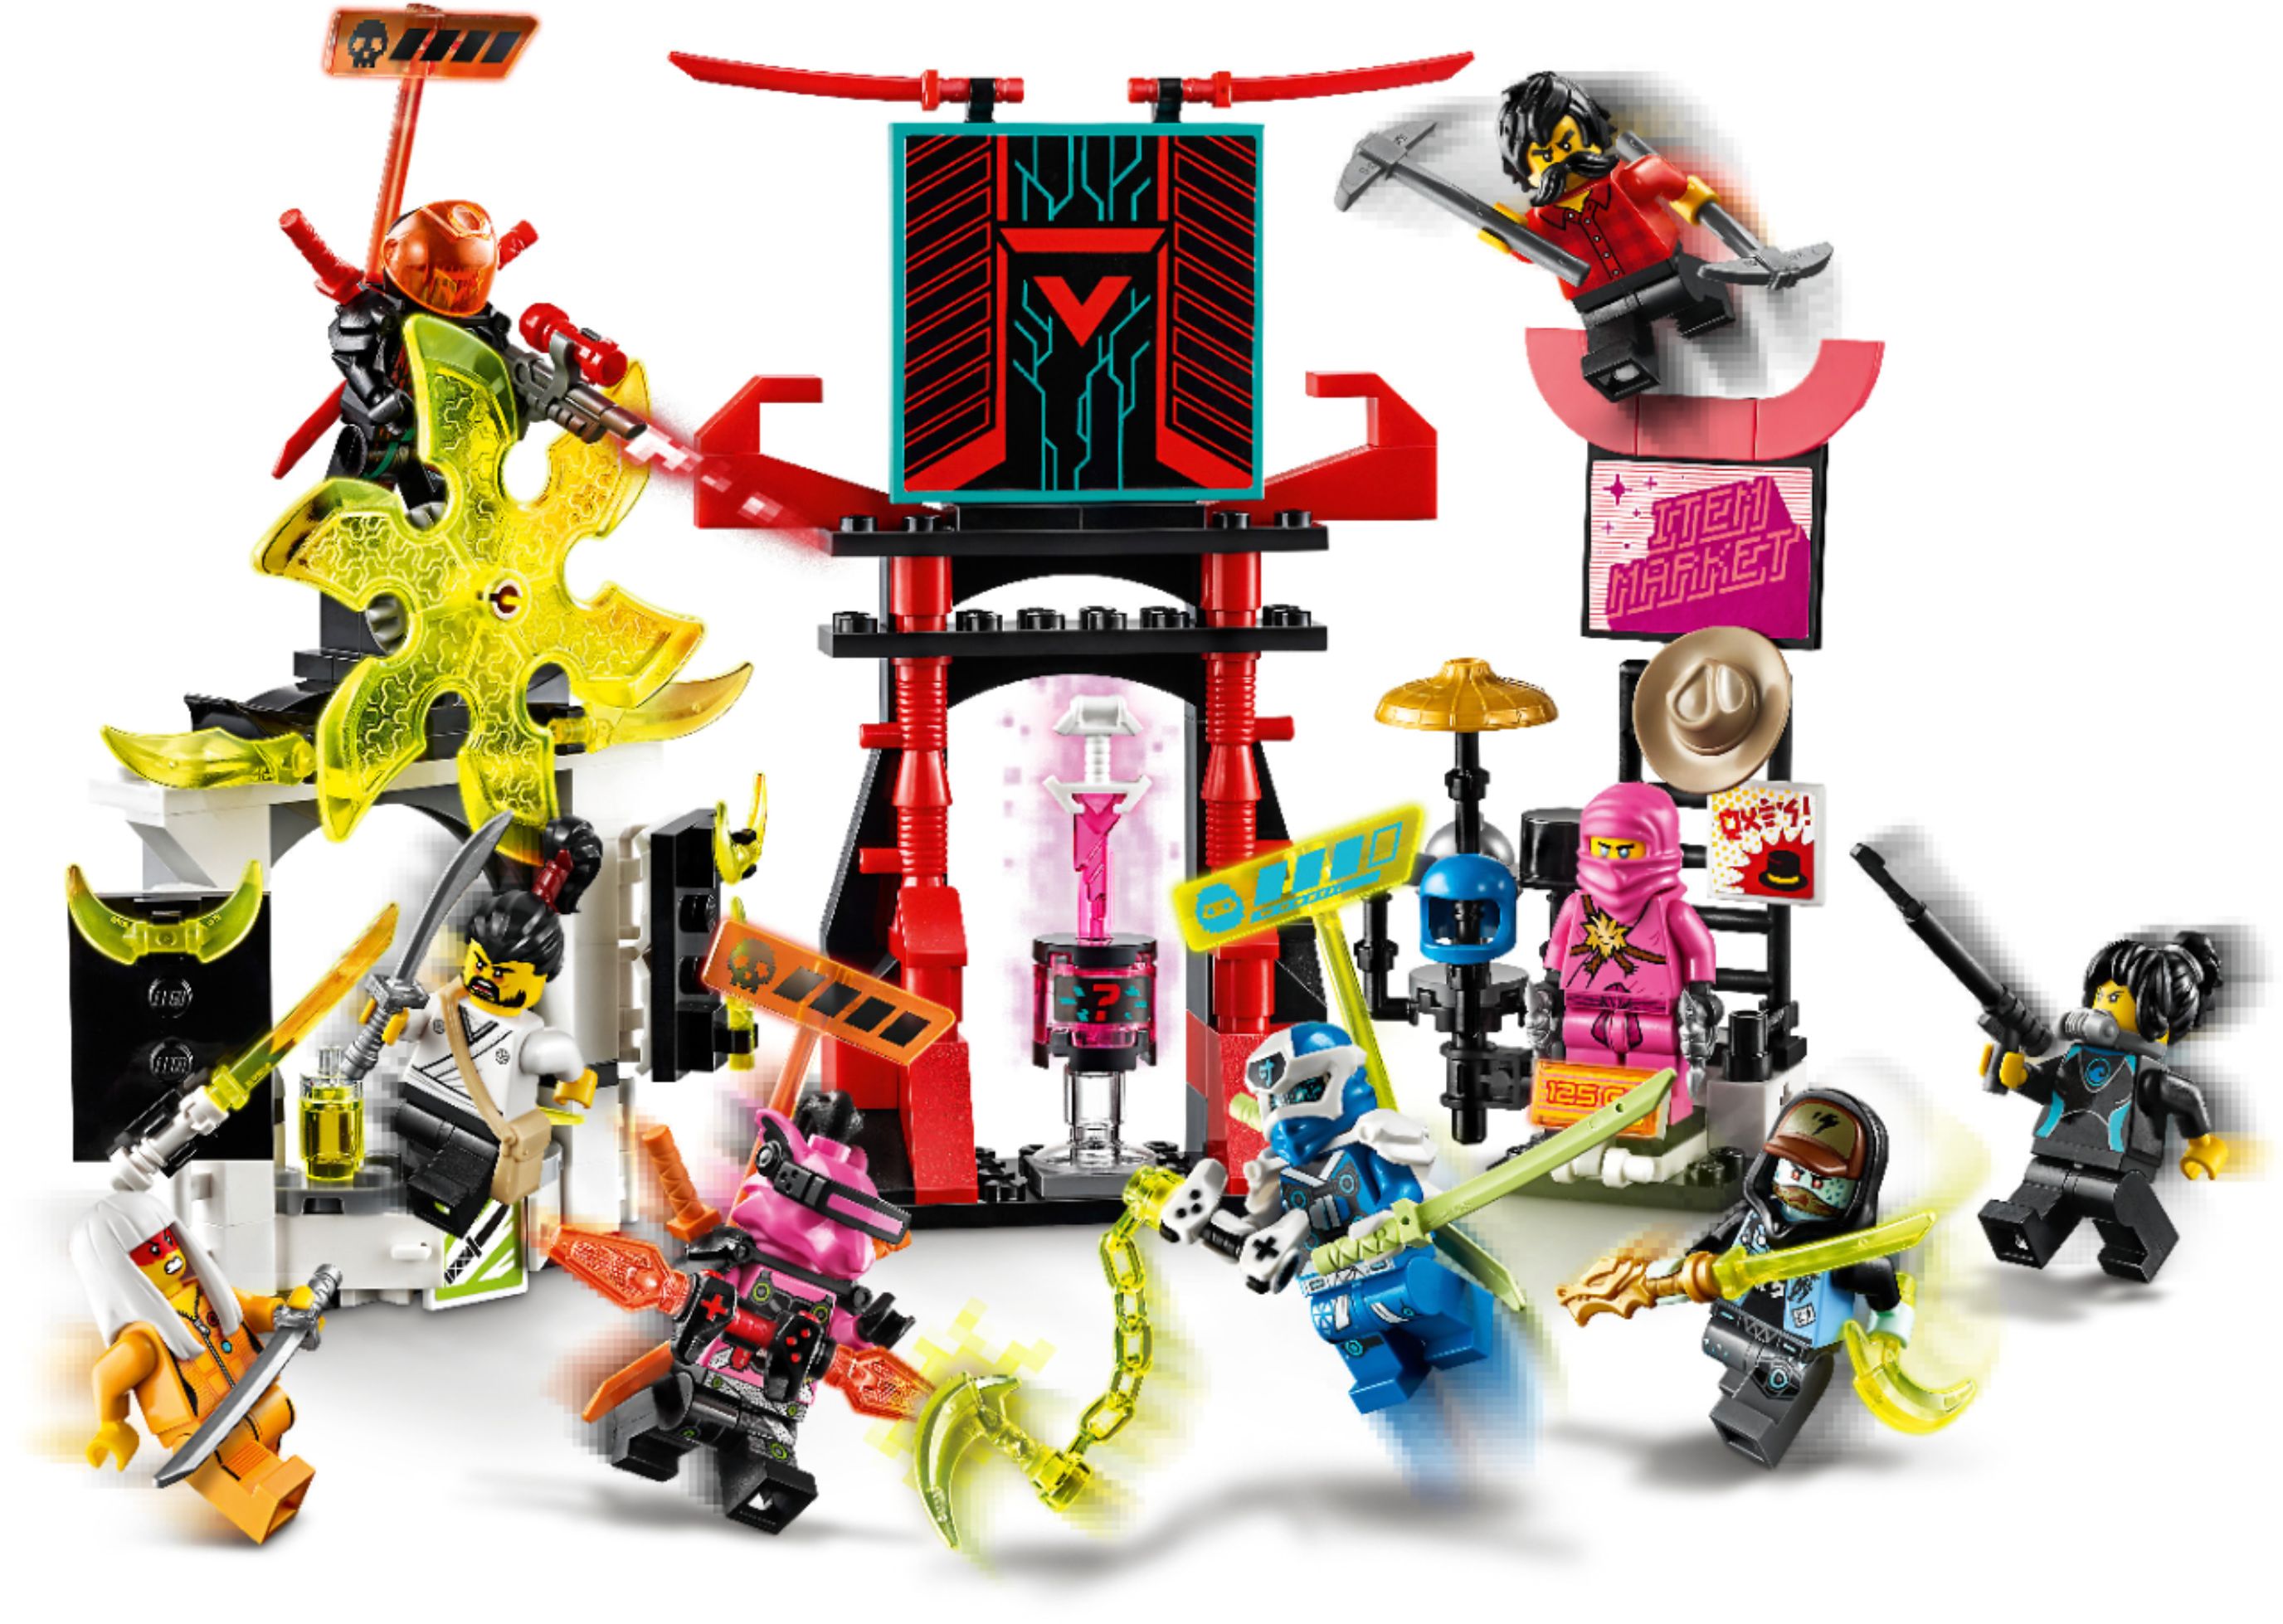 Set 71708 LEGO Ninjago Harumi Minifigure Gamers Market